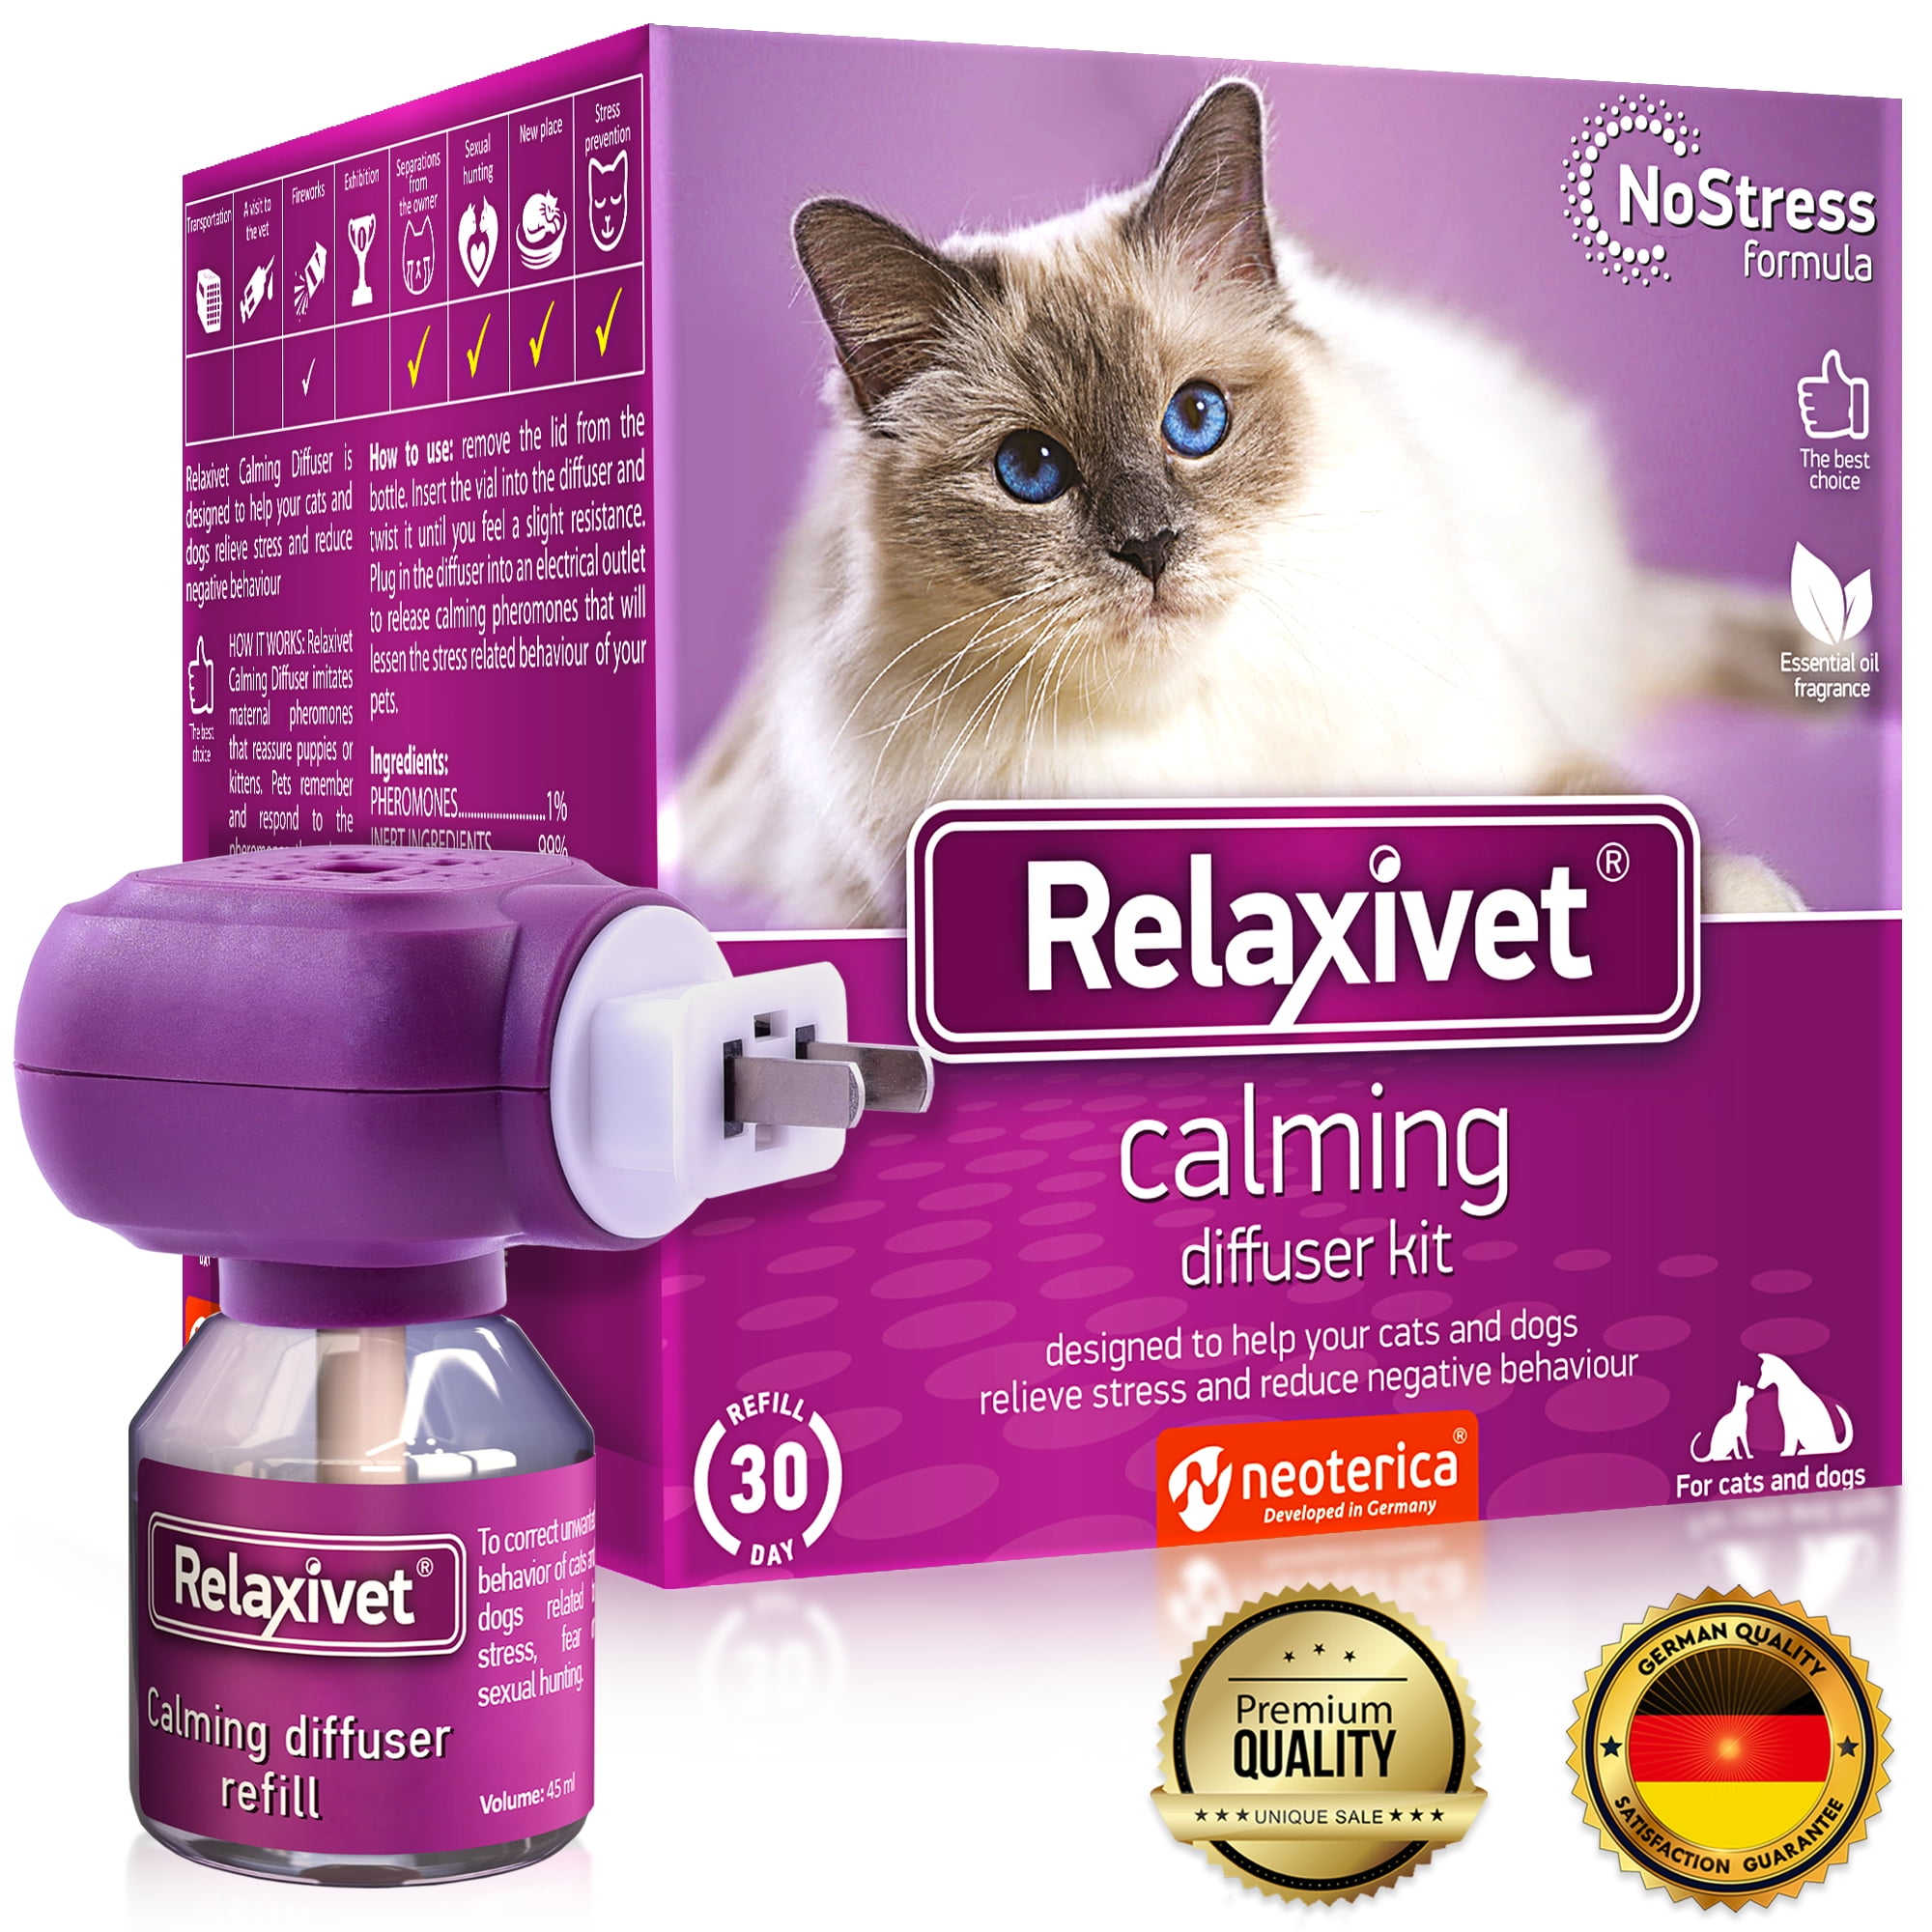 Relaxivet Cat Calming Pheromone Diffuser Improved NoStress Formula